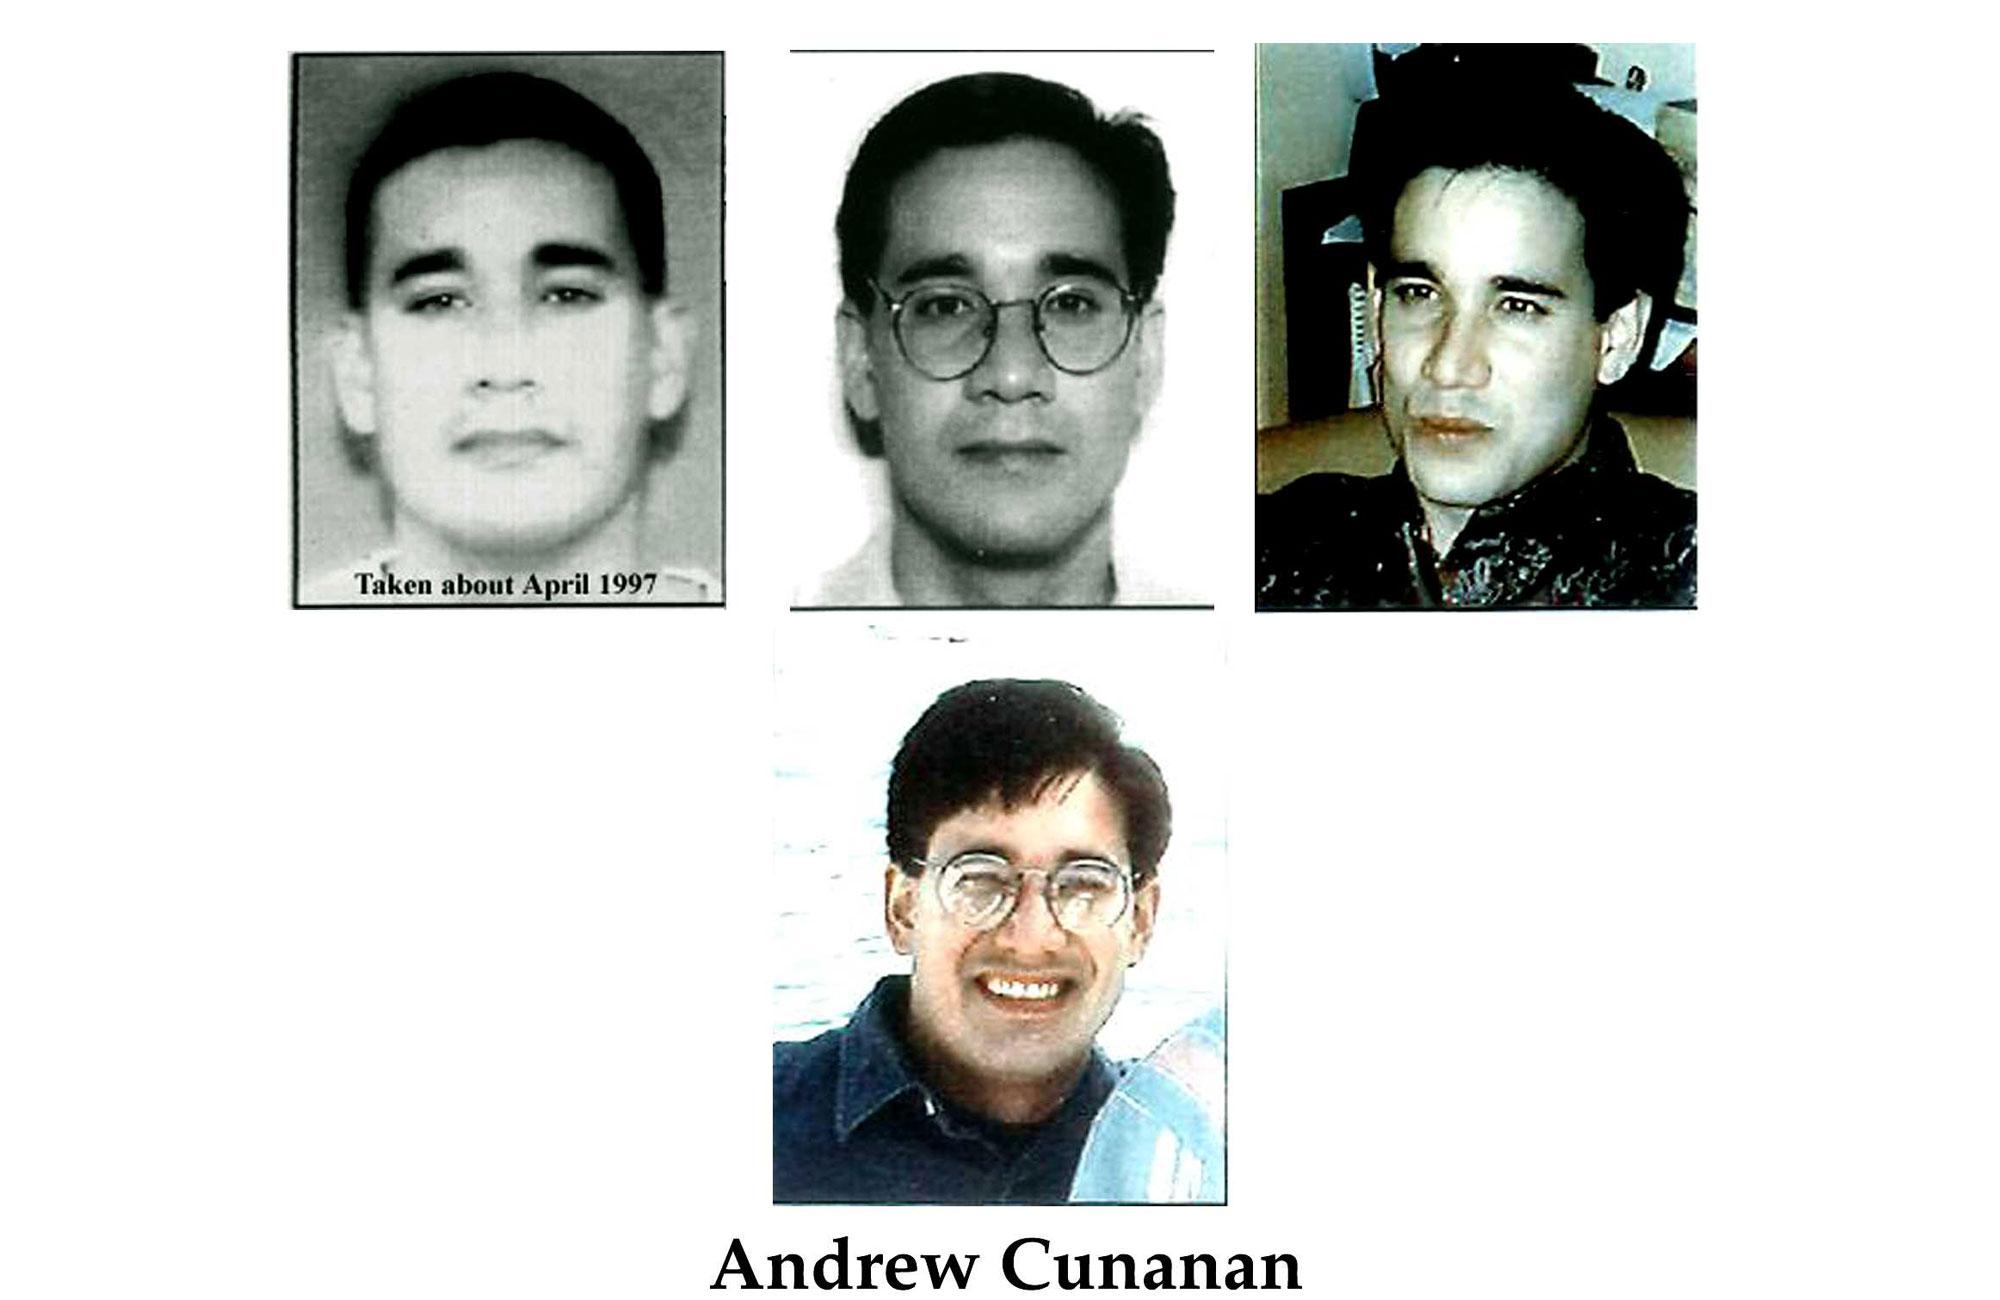 Andrew Cunanan